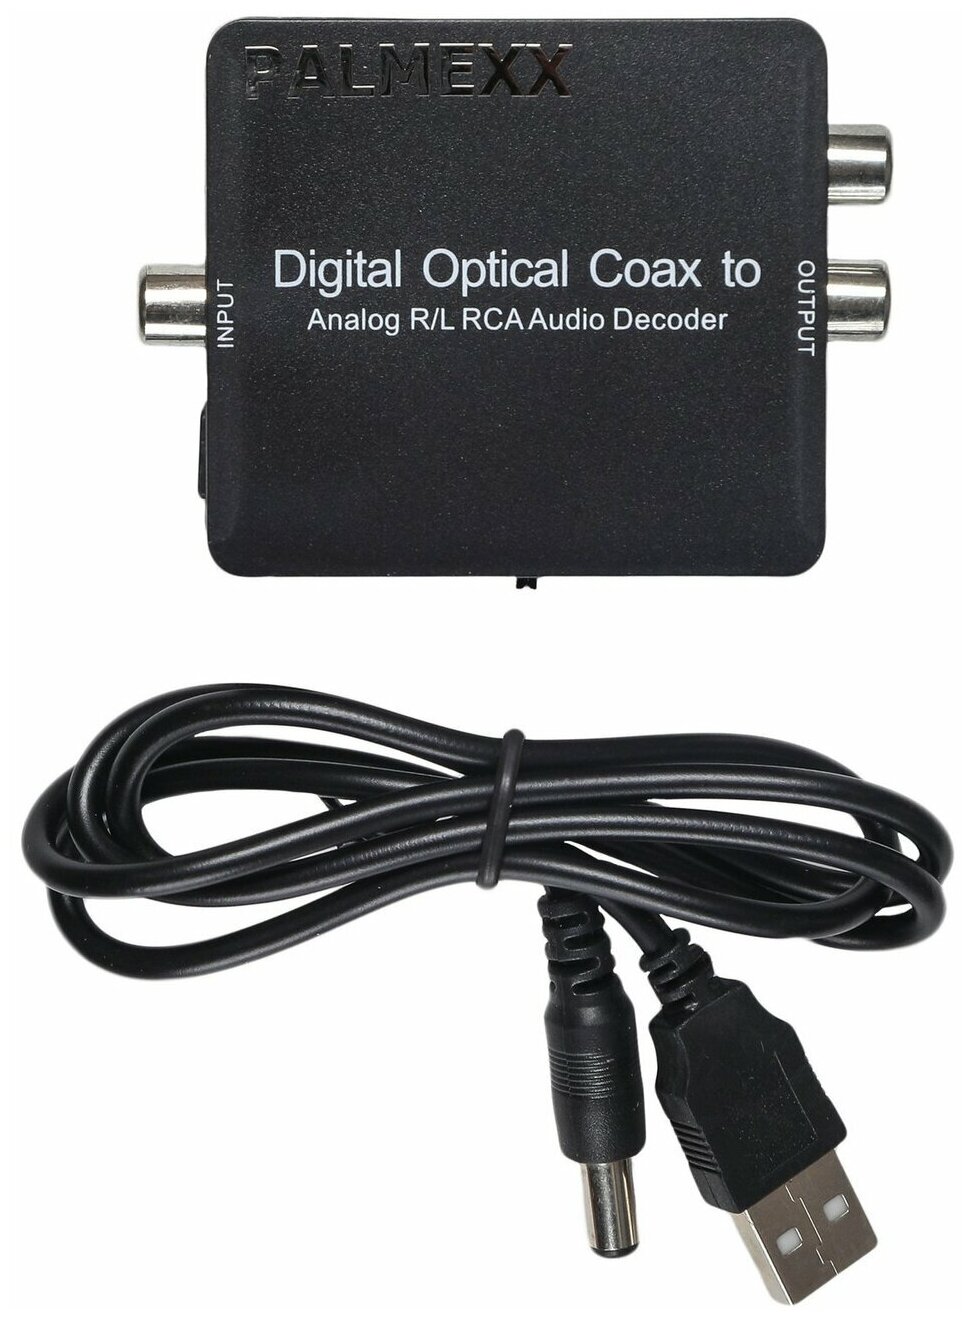  PALMEXX Digital Optical Coax to Analog R/L RCA Audio Decoder DOLBY AAC